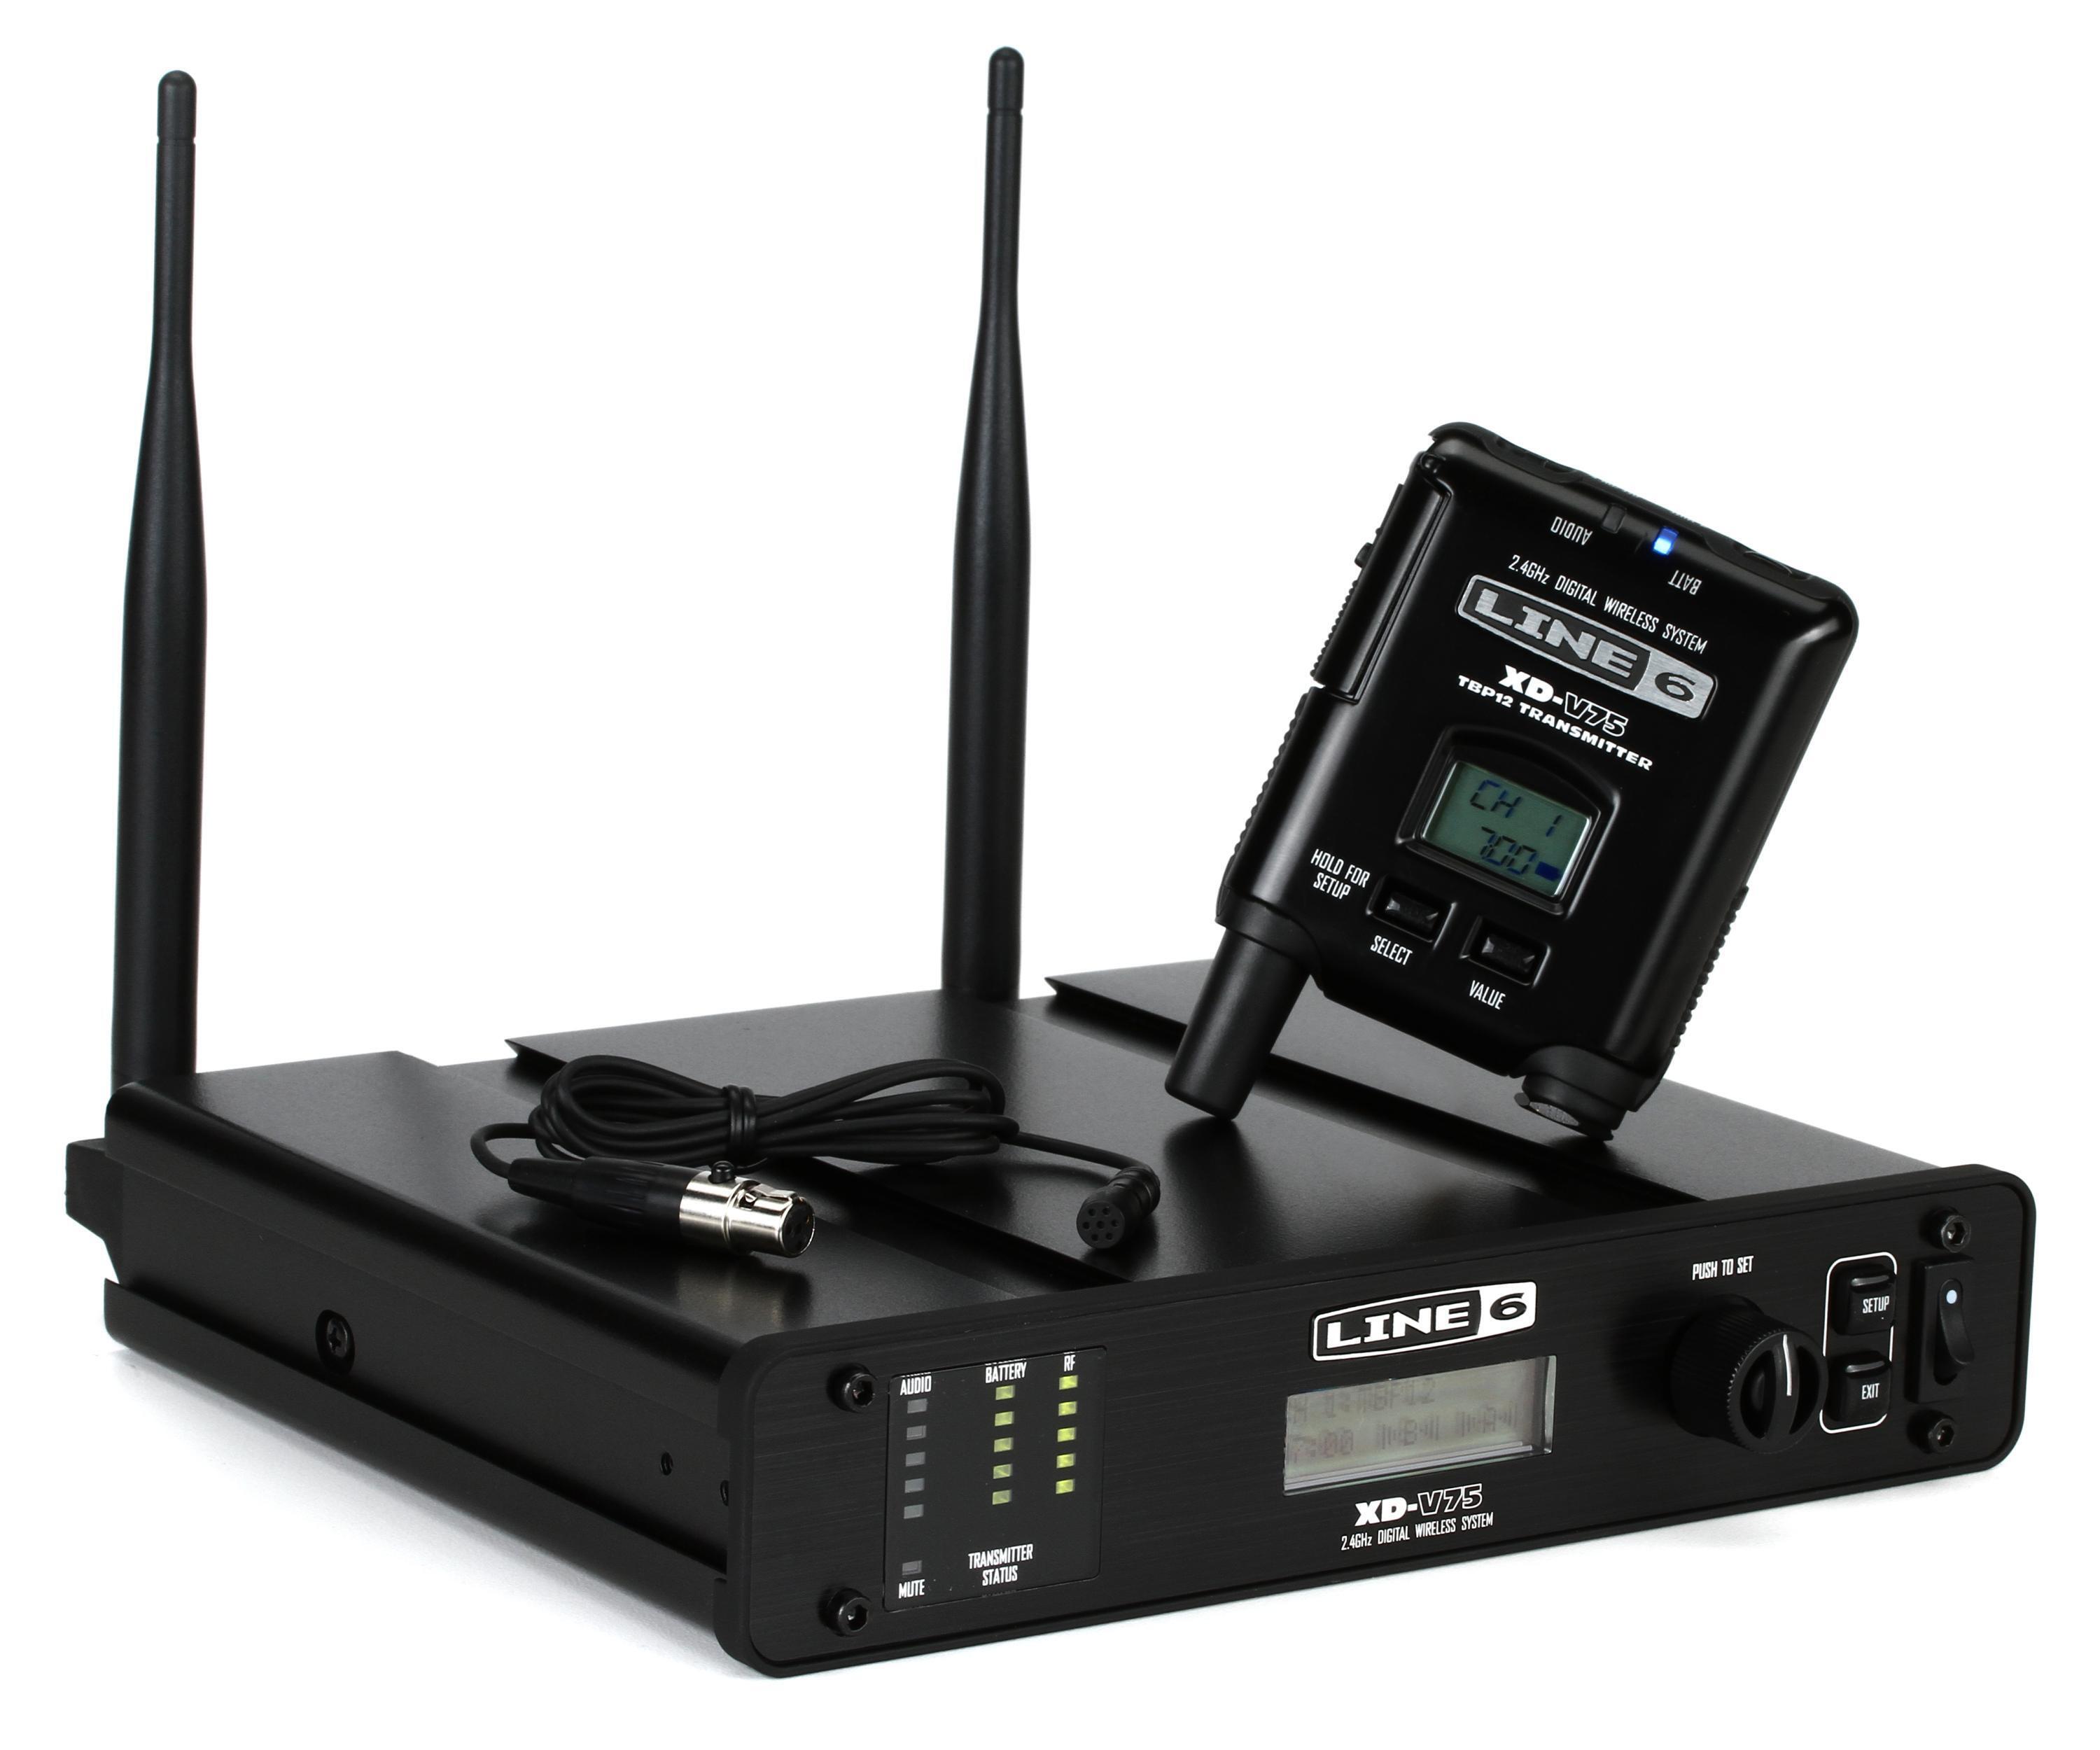 Line 6 XDV75L Digital Wireless Lavalier Mic System